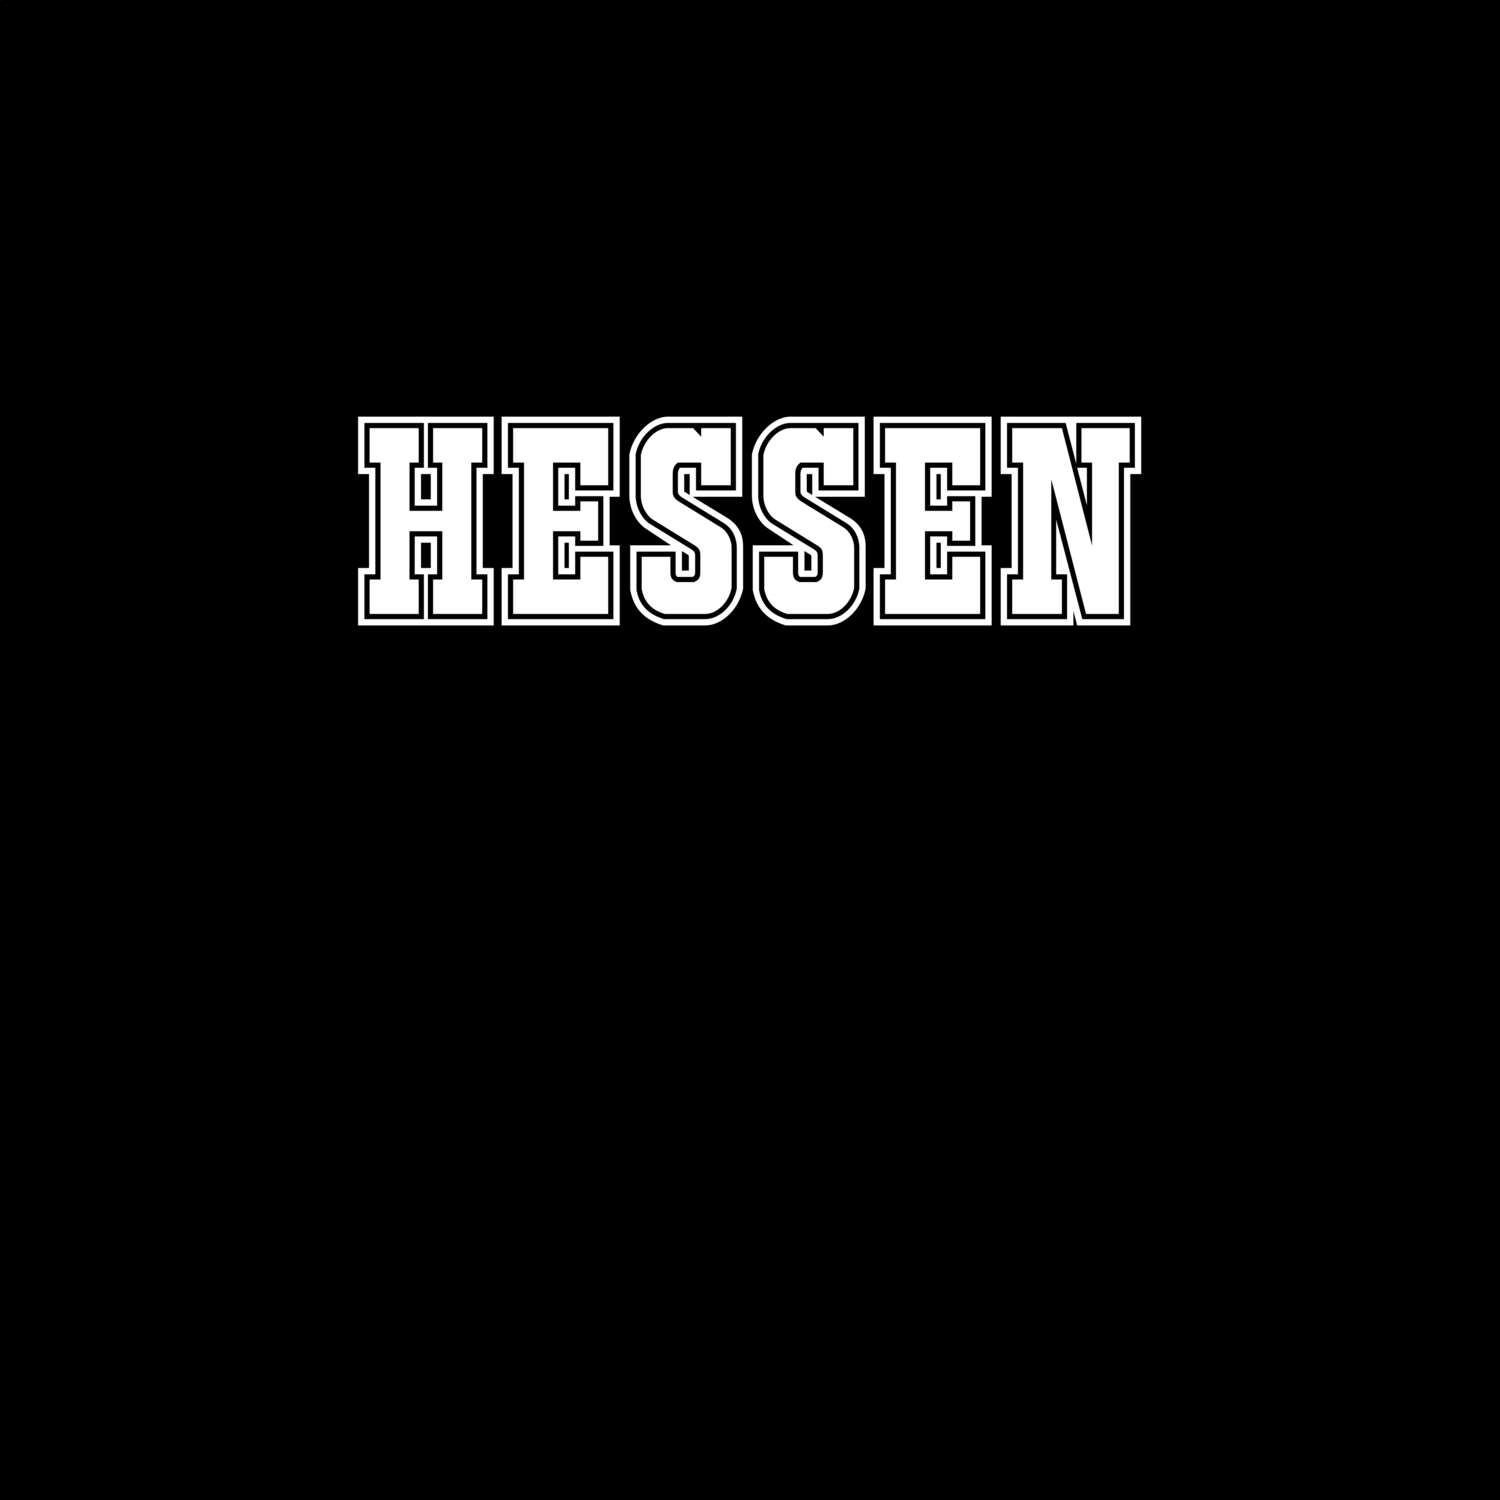 Hessen T-Shirt »Classic«